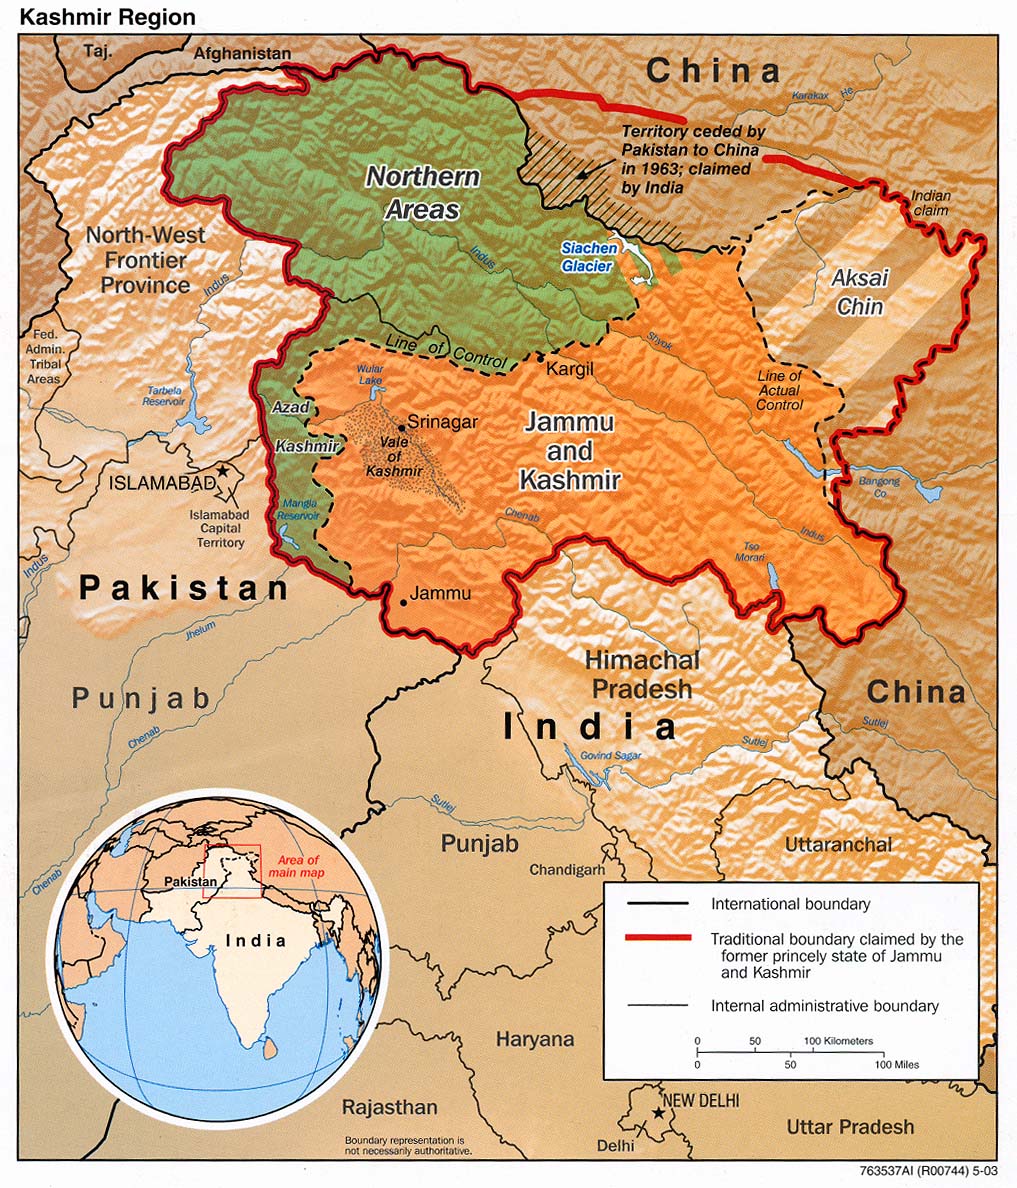                         Map of Kashmir            
Detailed Map of KASHMIR showing Pakistan Occupied Kashmir & China Occupied Kashmir